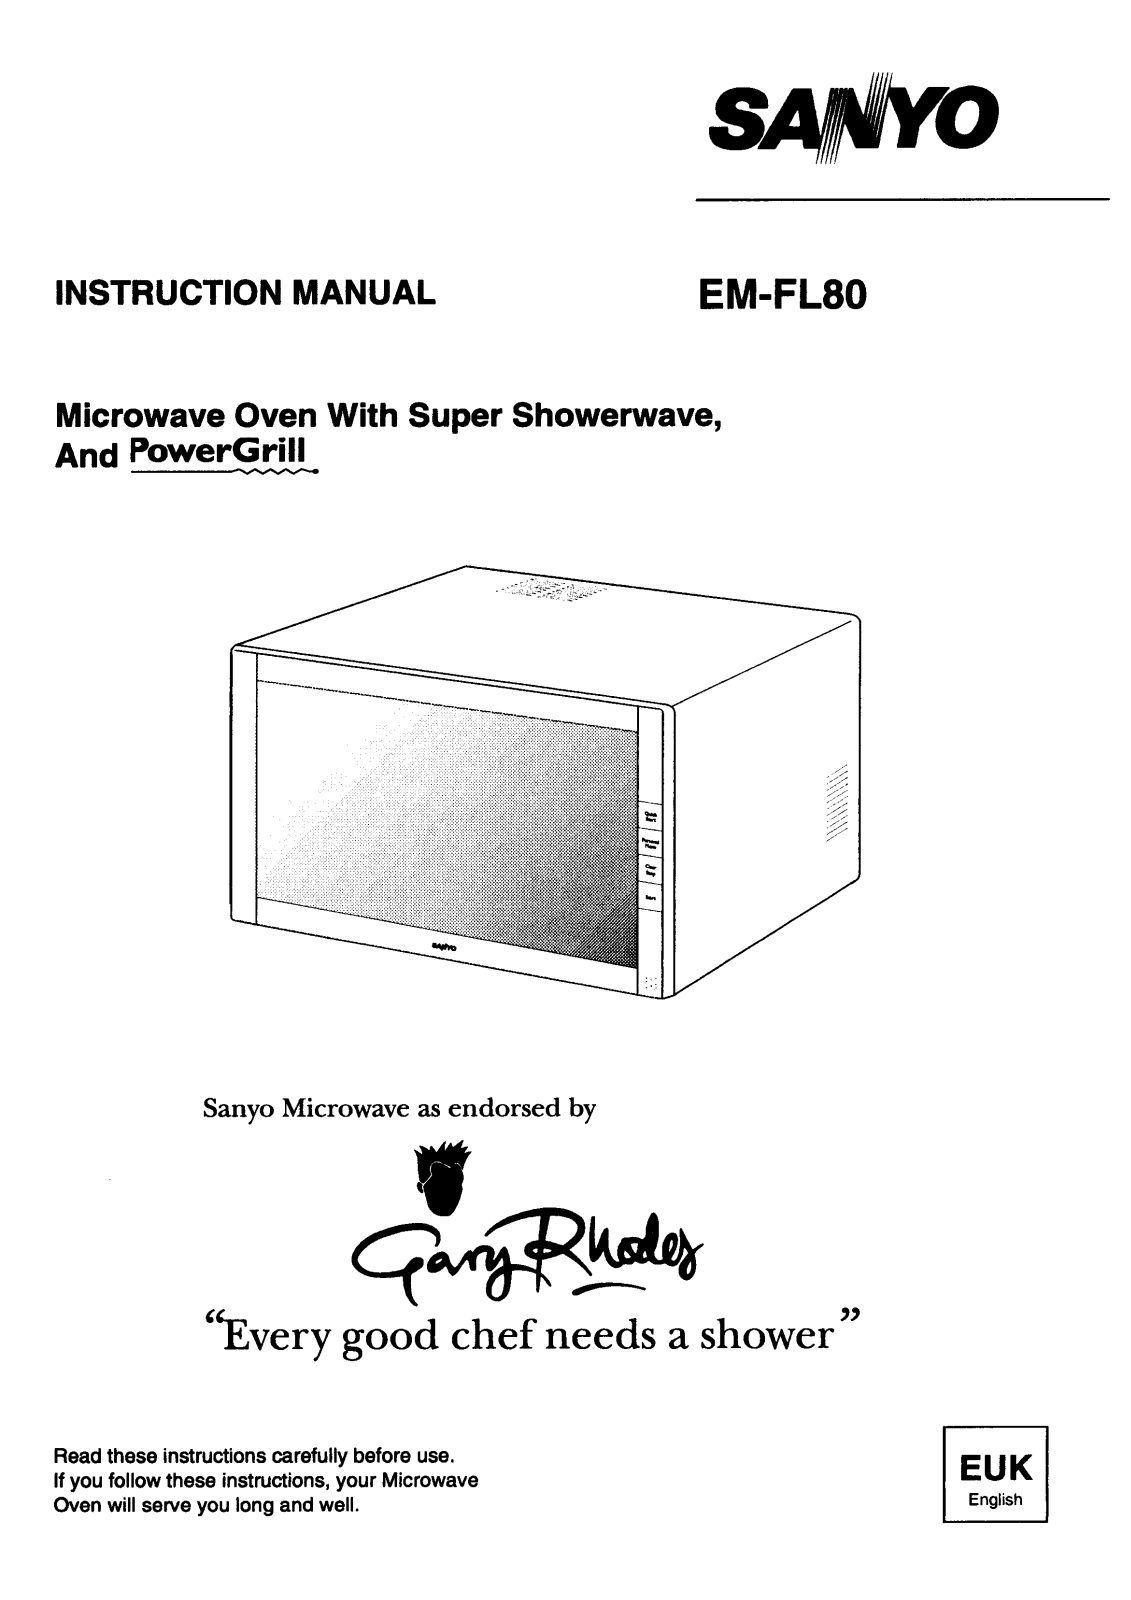 Sanyo EM-FL80 Instruction Manual